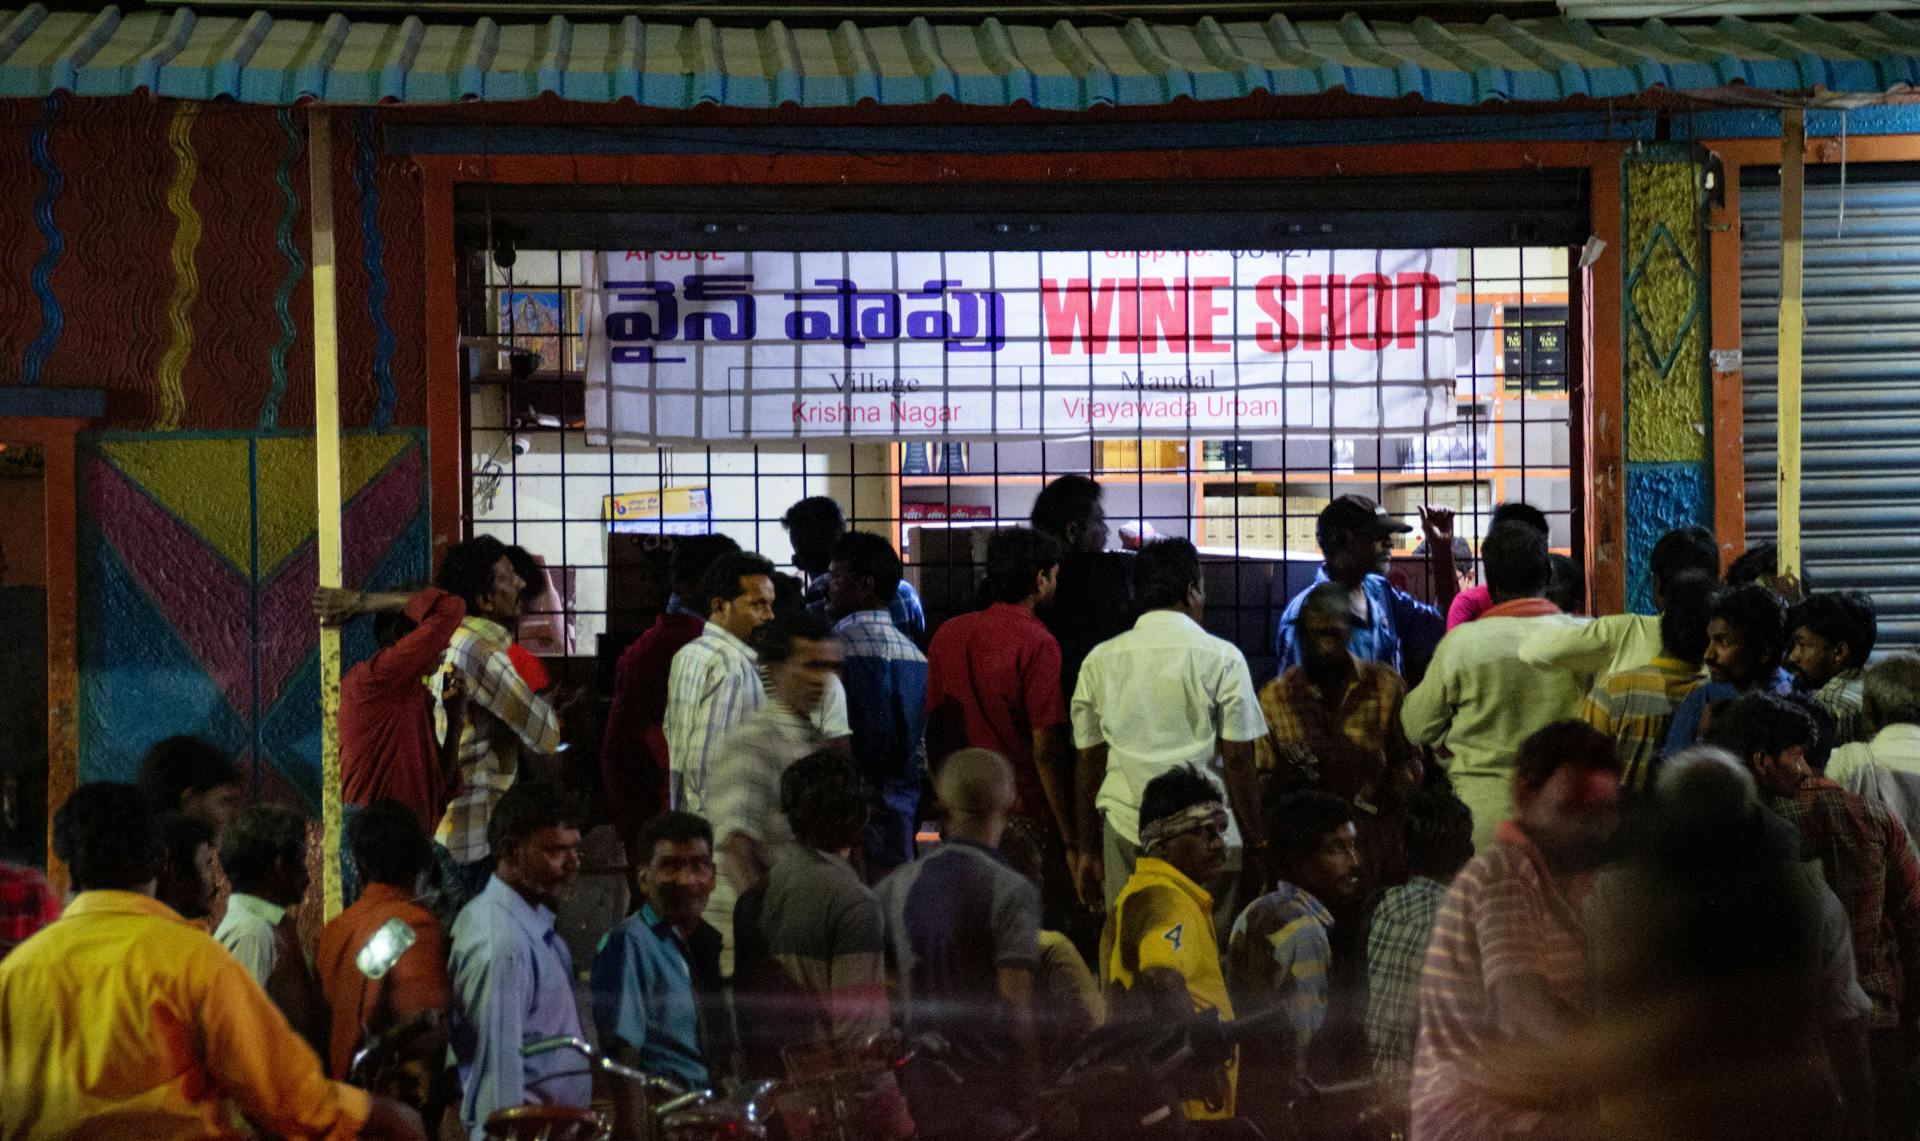 The remaining wine shops in Vijayawada draw jostling crowds every night. Photo by Justin Nisly.